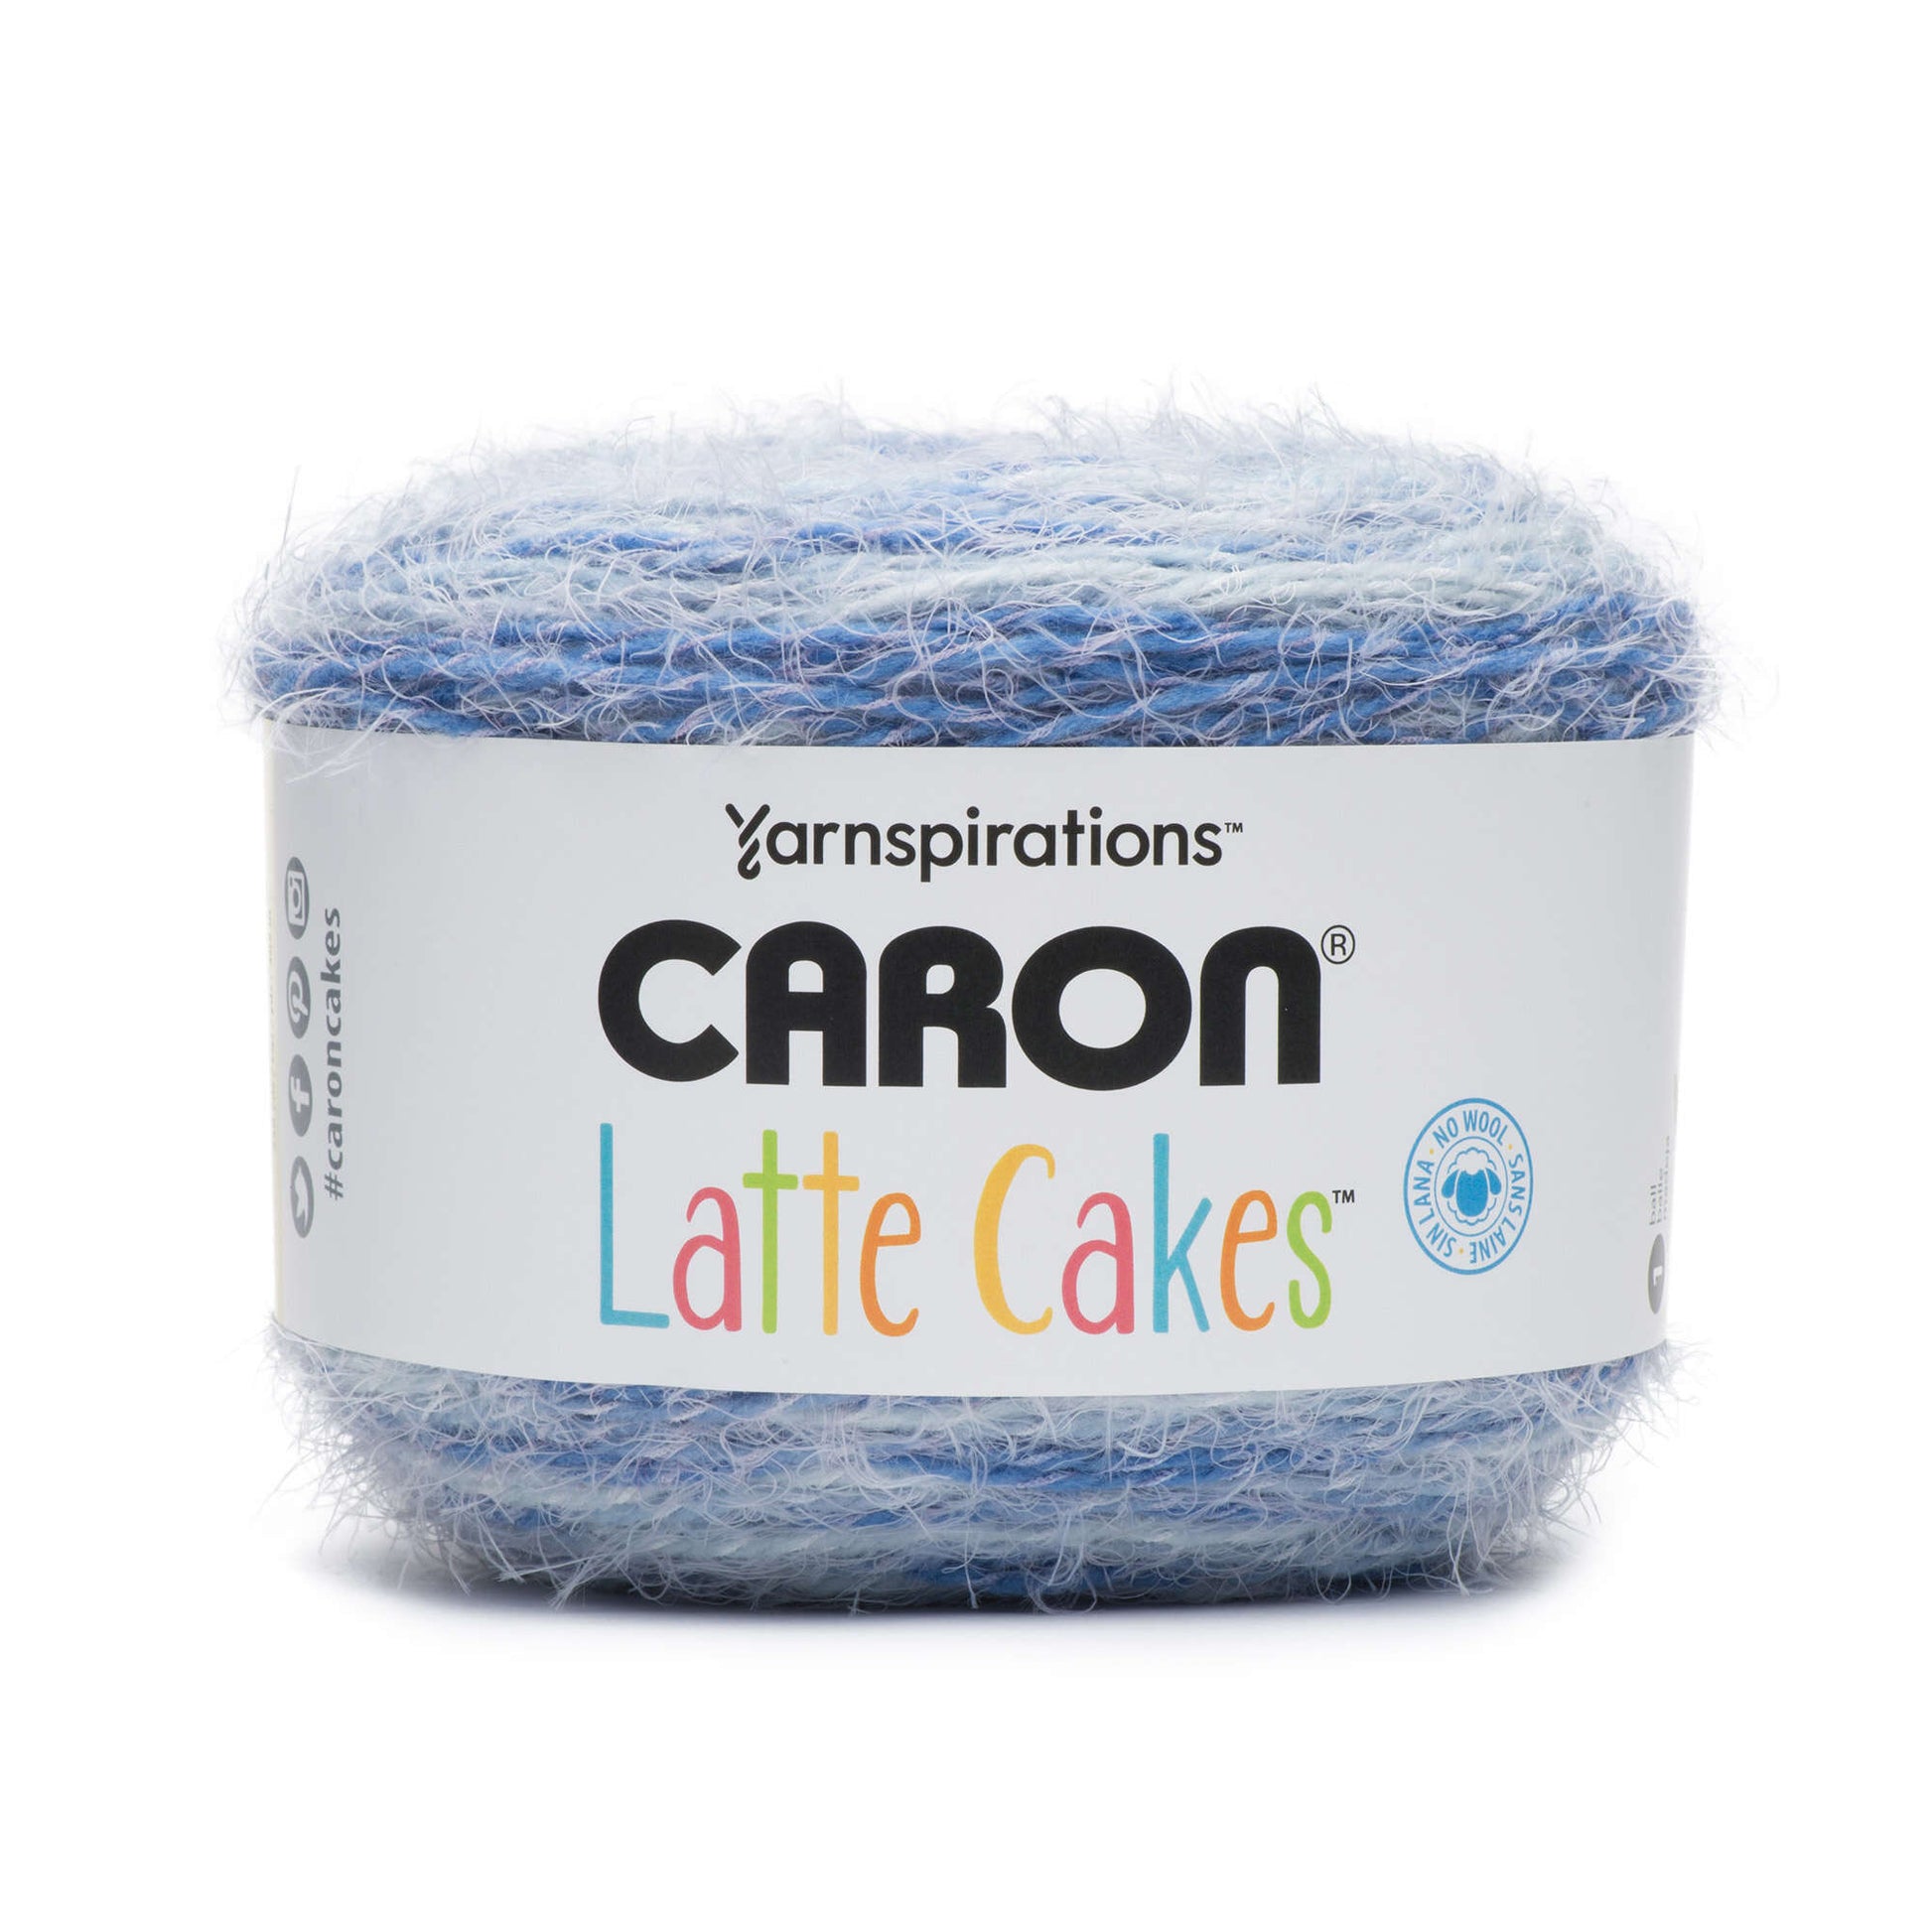 Caron Latte Cakes Yarn